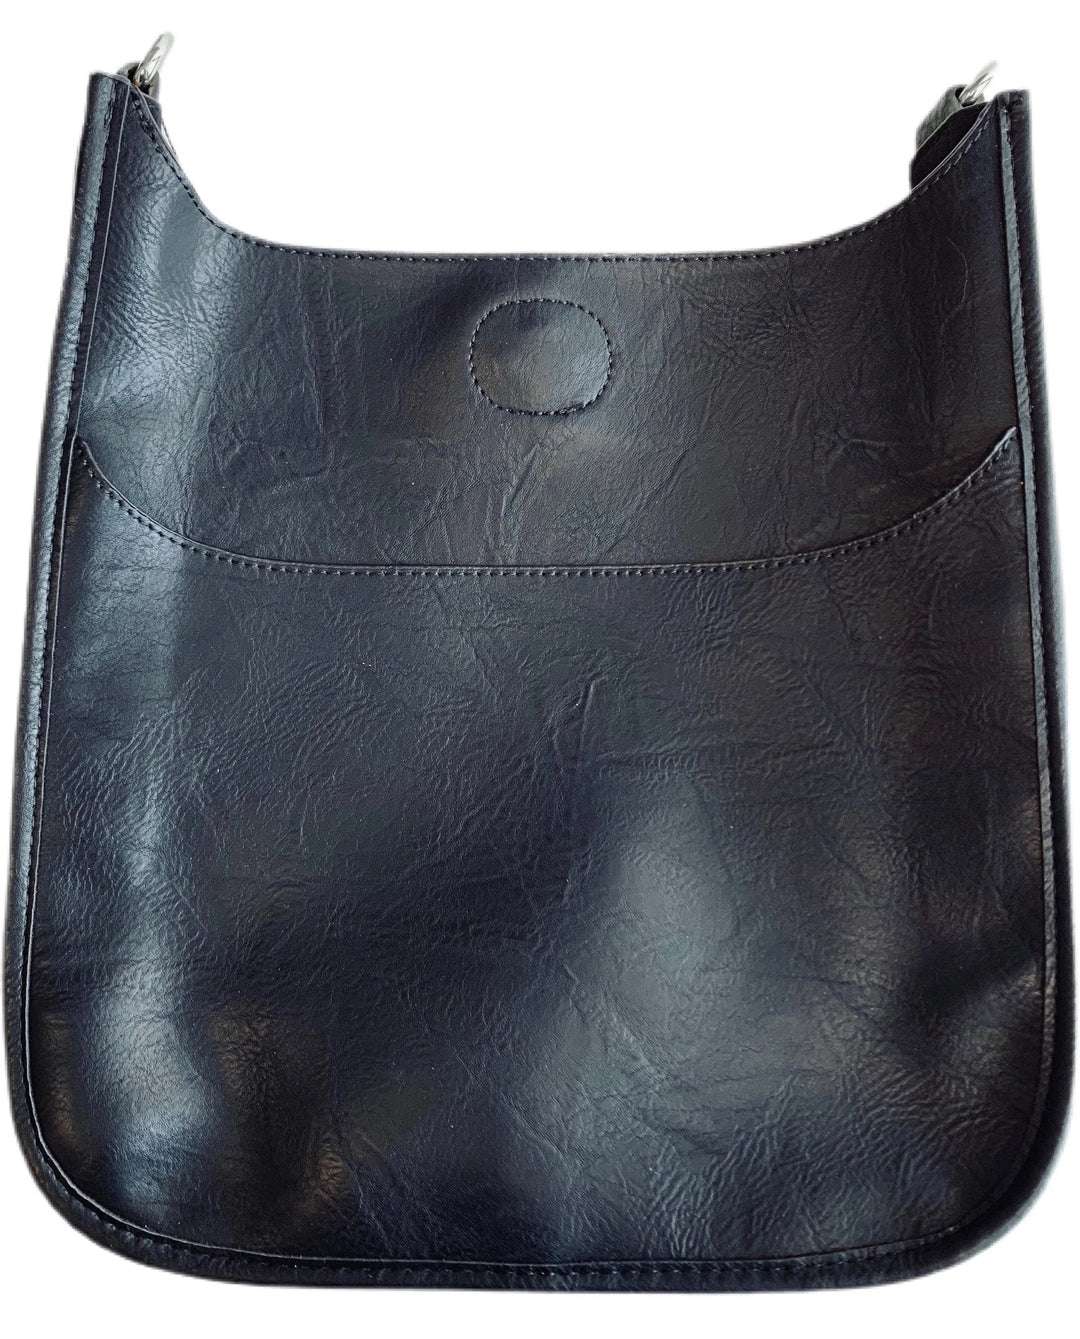 Ahdorned-Vegan Leather Classic Size Bag (No Strap) -Black w/Gold Hrdwr - Shorely Chic Boutique